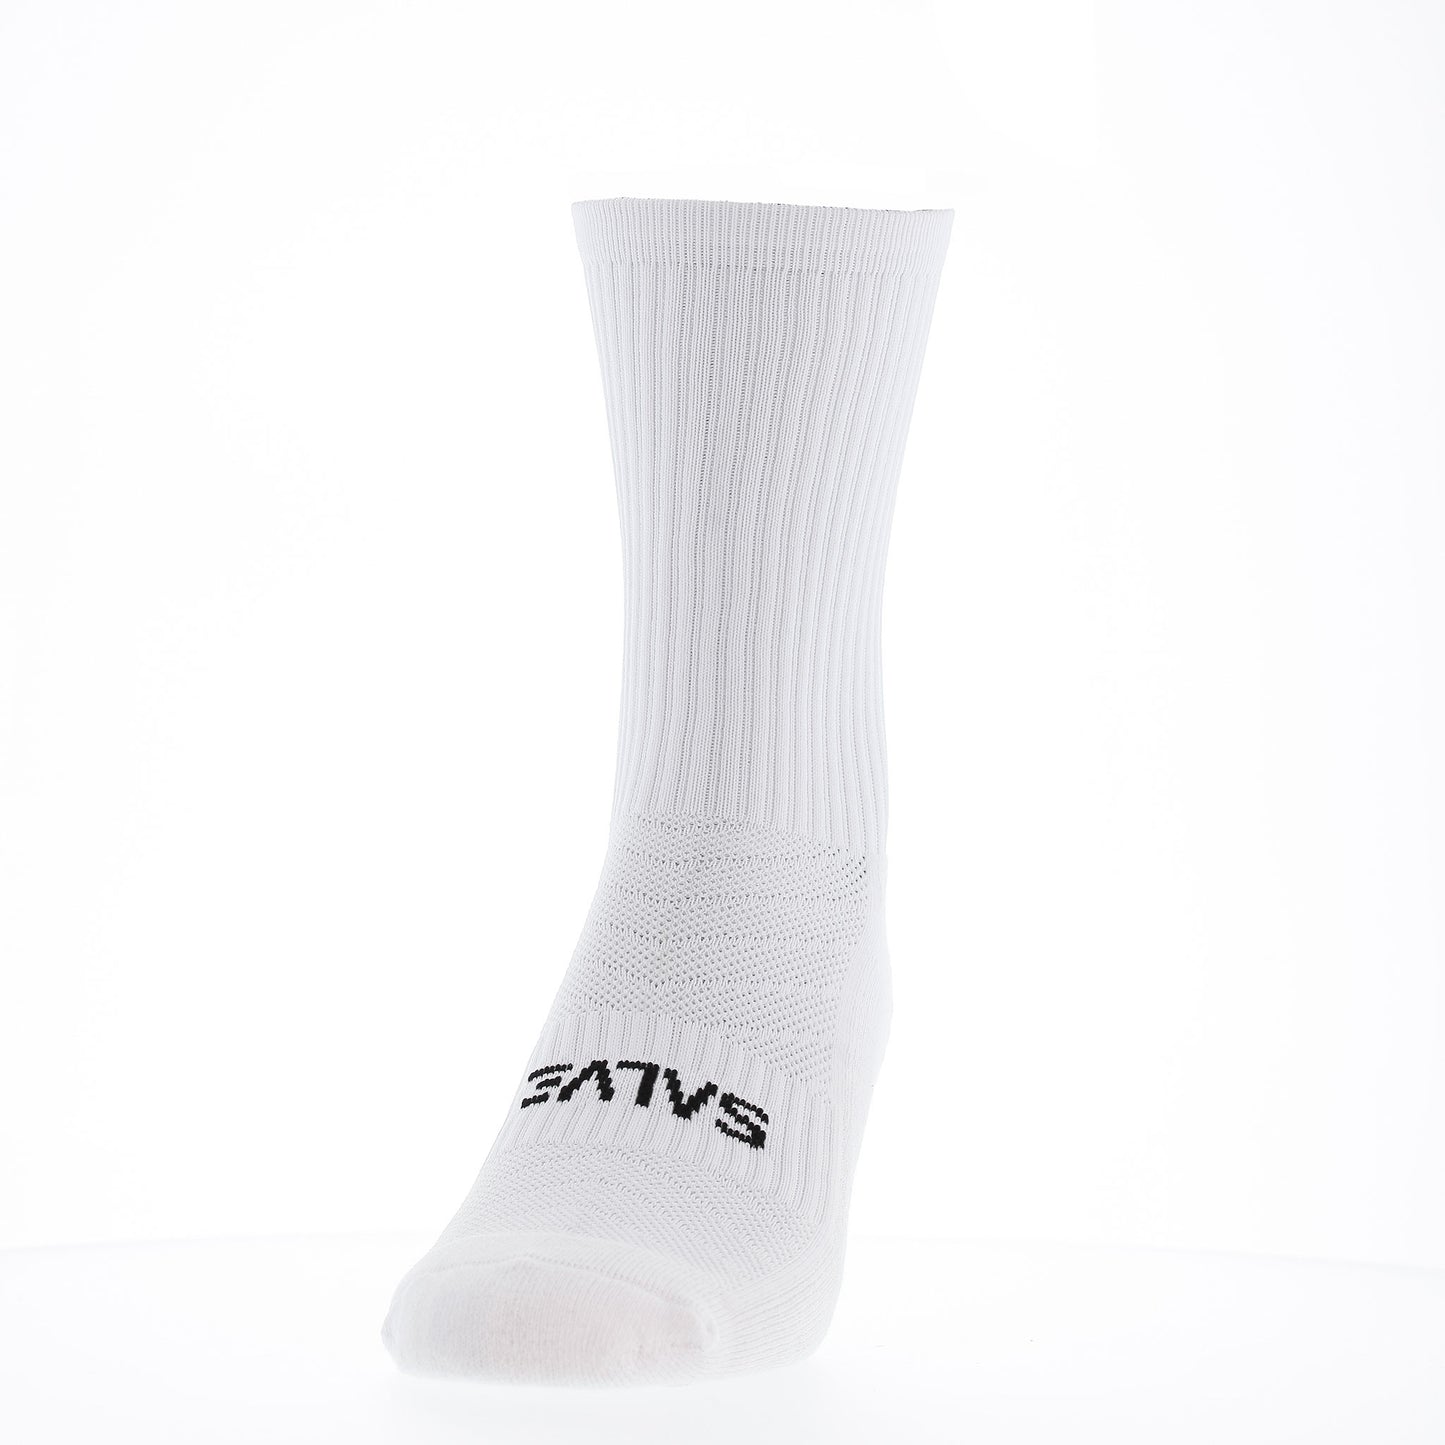 Salve Grip-socks 1.0 2-pack, mixed